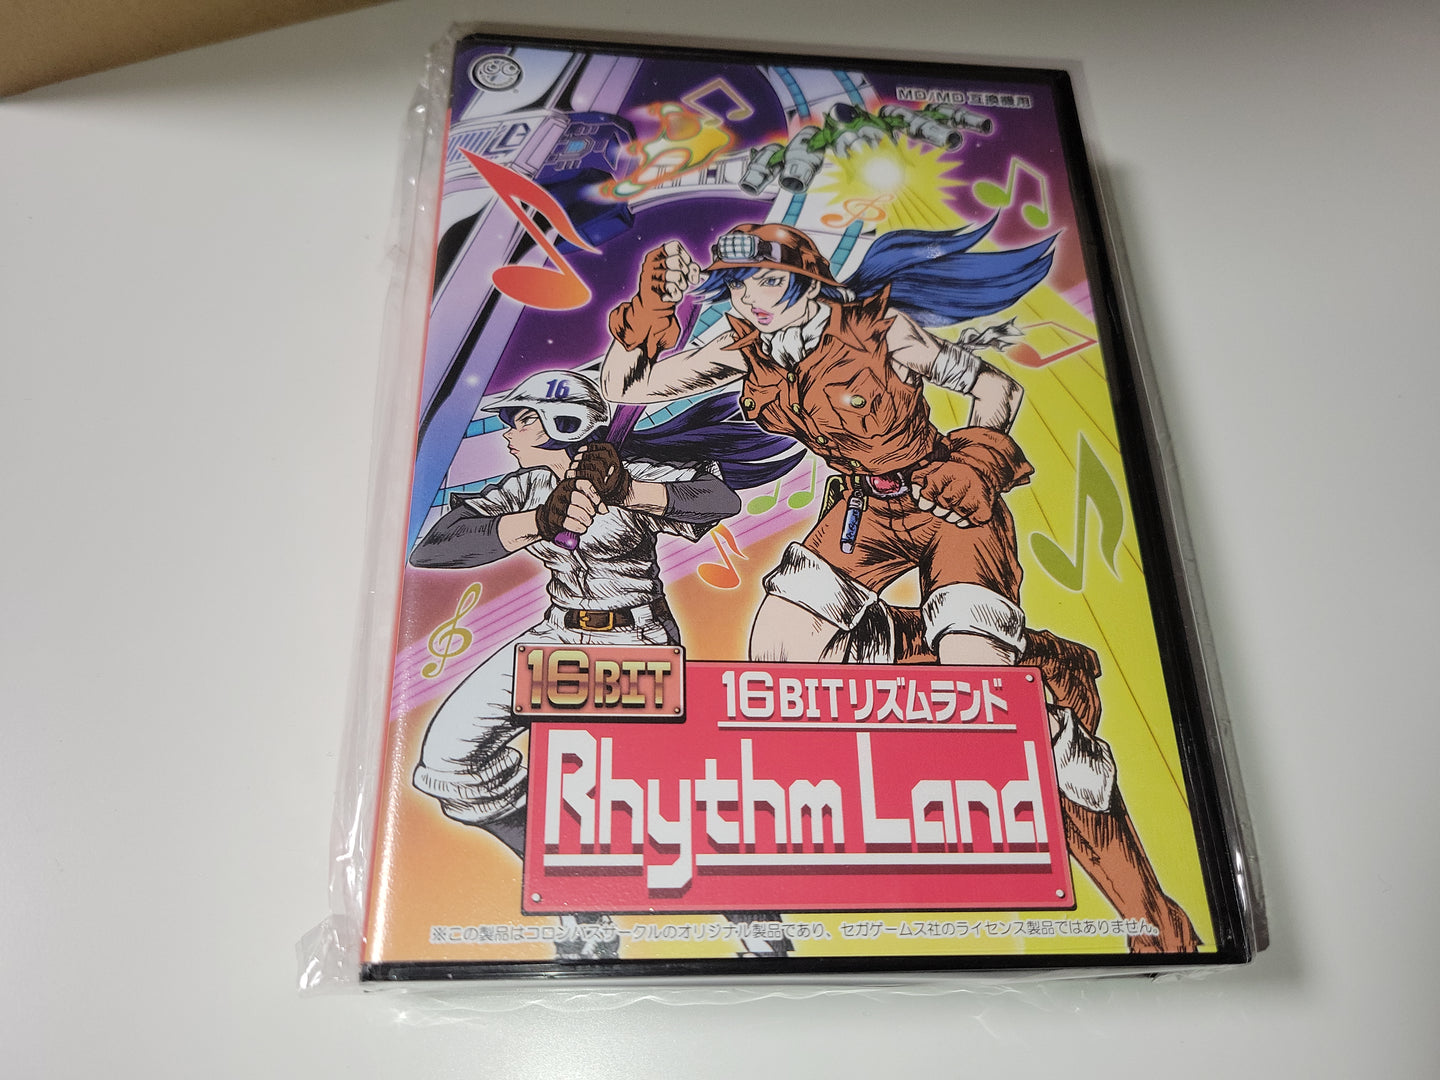 16Bit Rhythm Land first print set - Sega MD MegaDrive